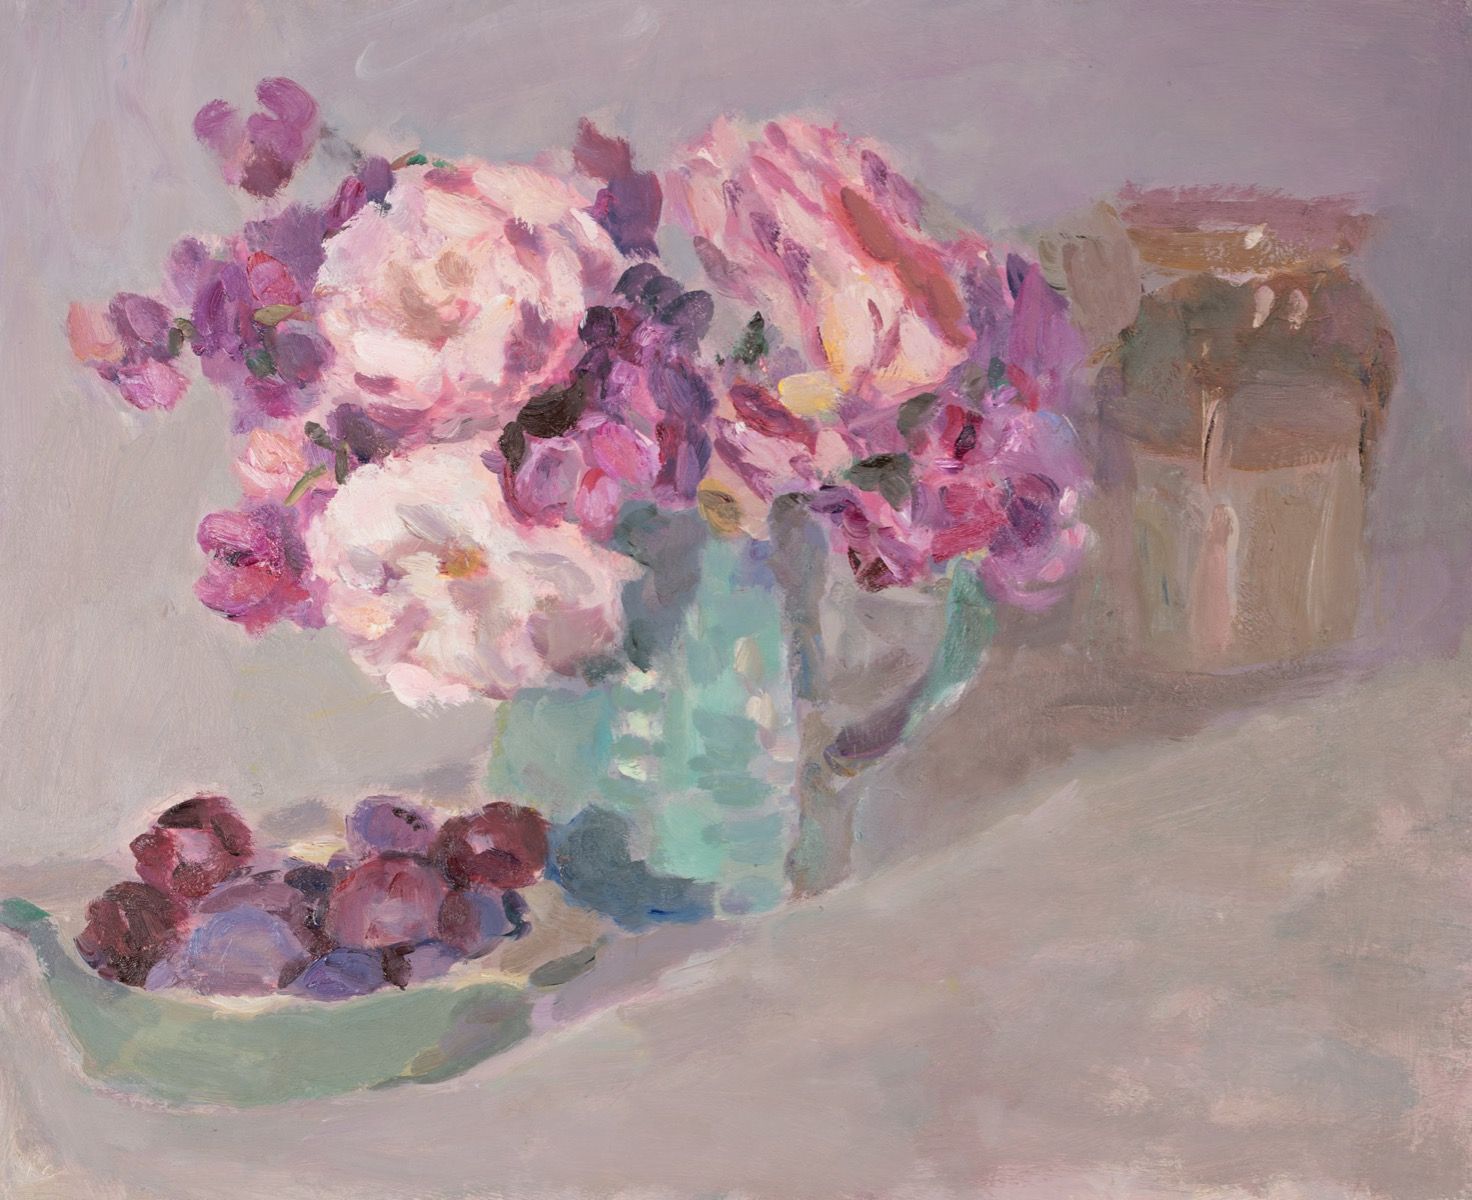 Roses, Sweet Peas and Plums by Lynne Cartlidge